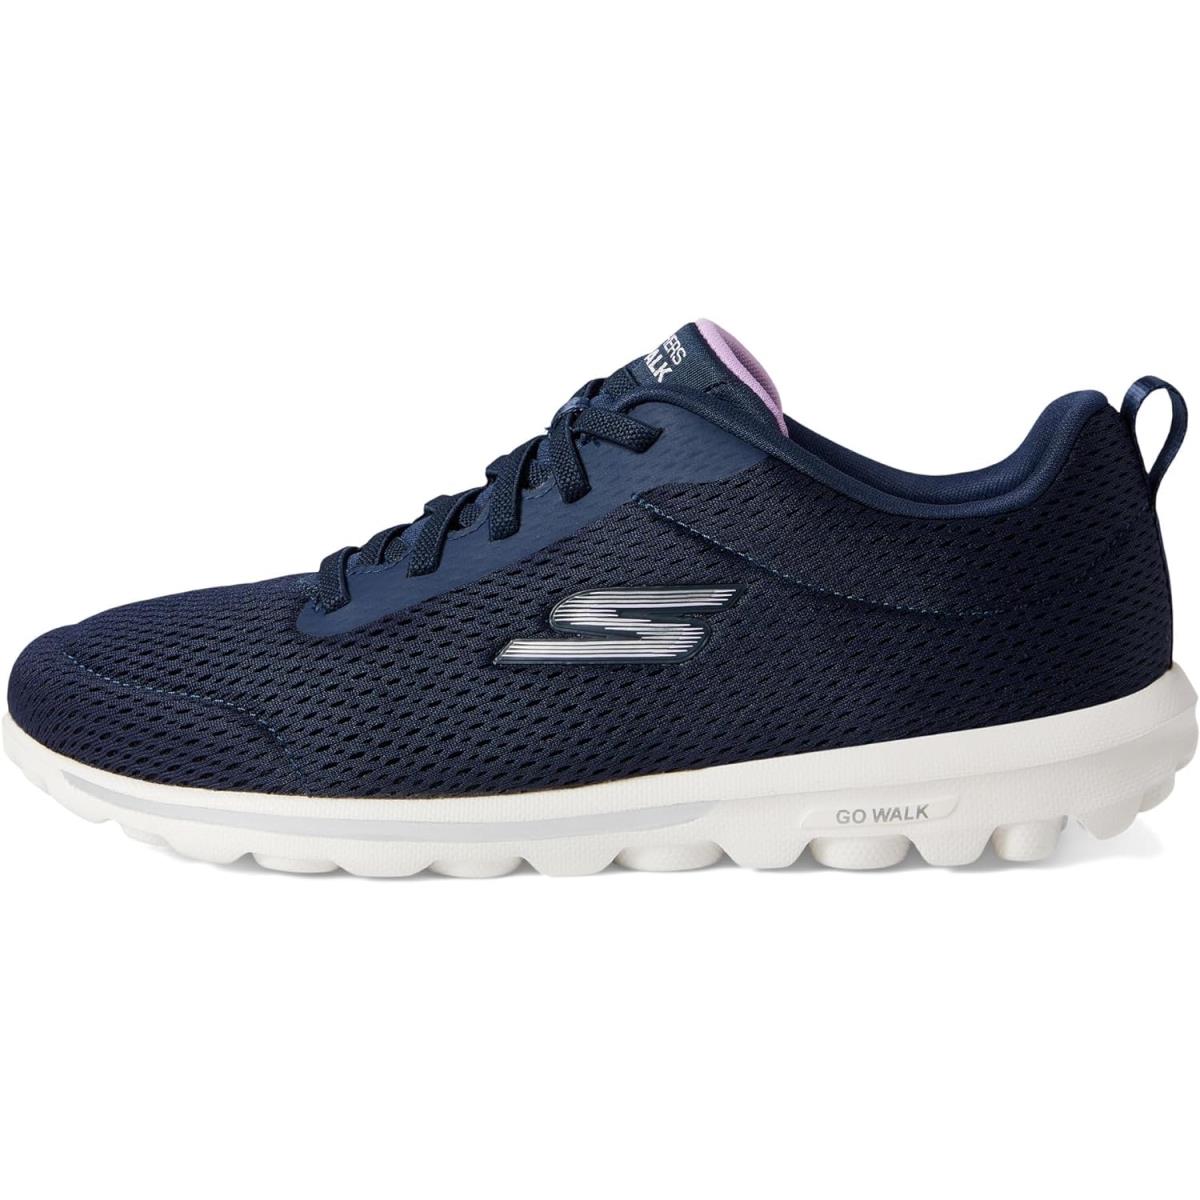 Skechers Women`s Go Walk Travel-fun Journey Sneaker Navy/Lavender